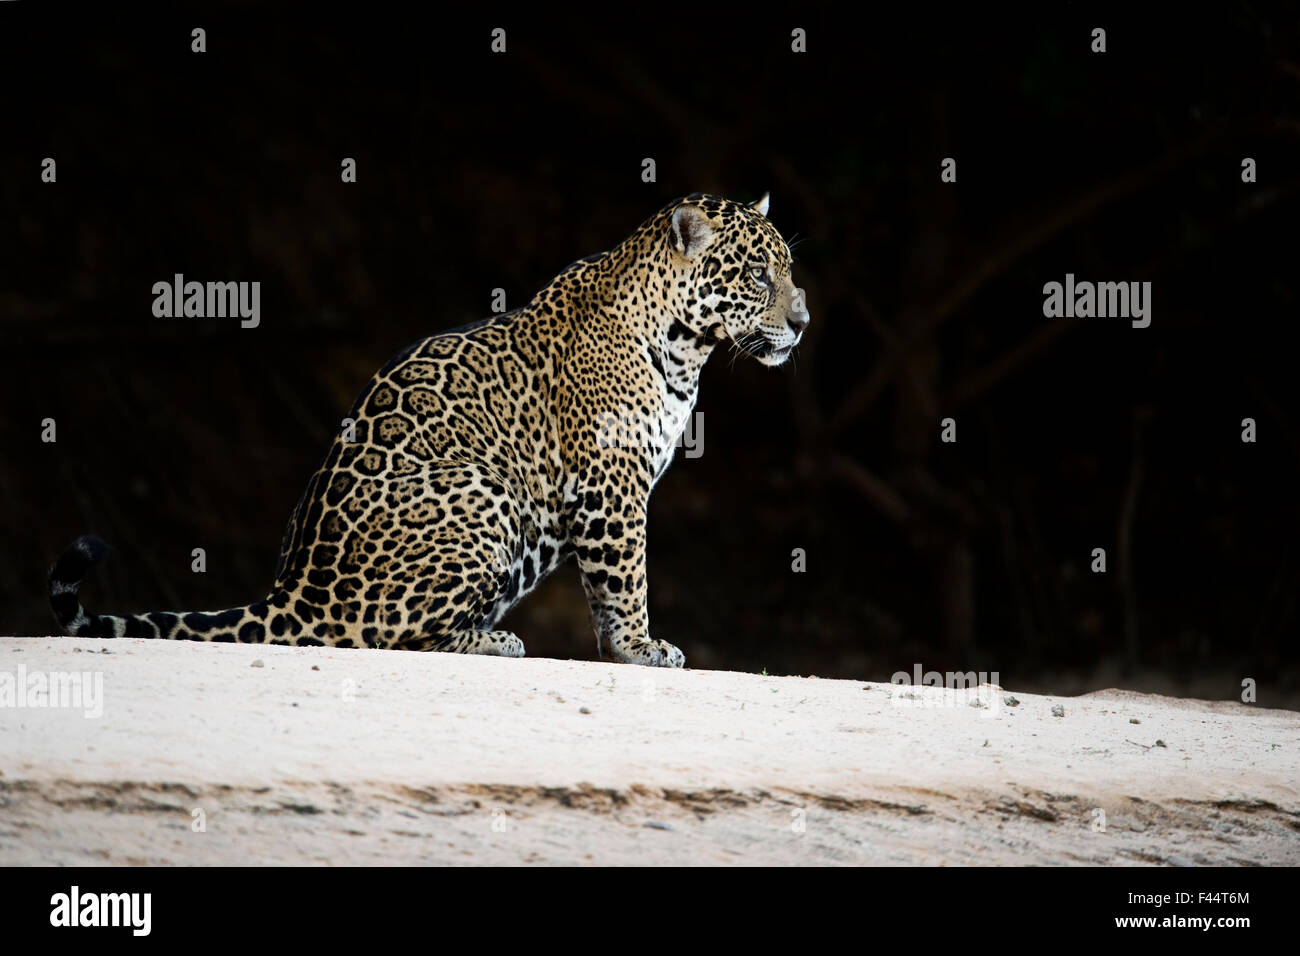 Jaguar (Pantera onca) sitting at night, Mato Grosso, Brazil Stock Photo